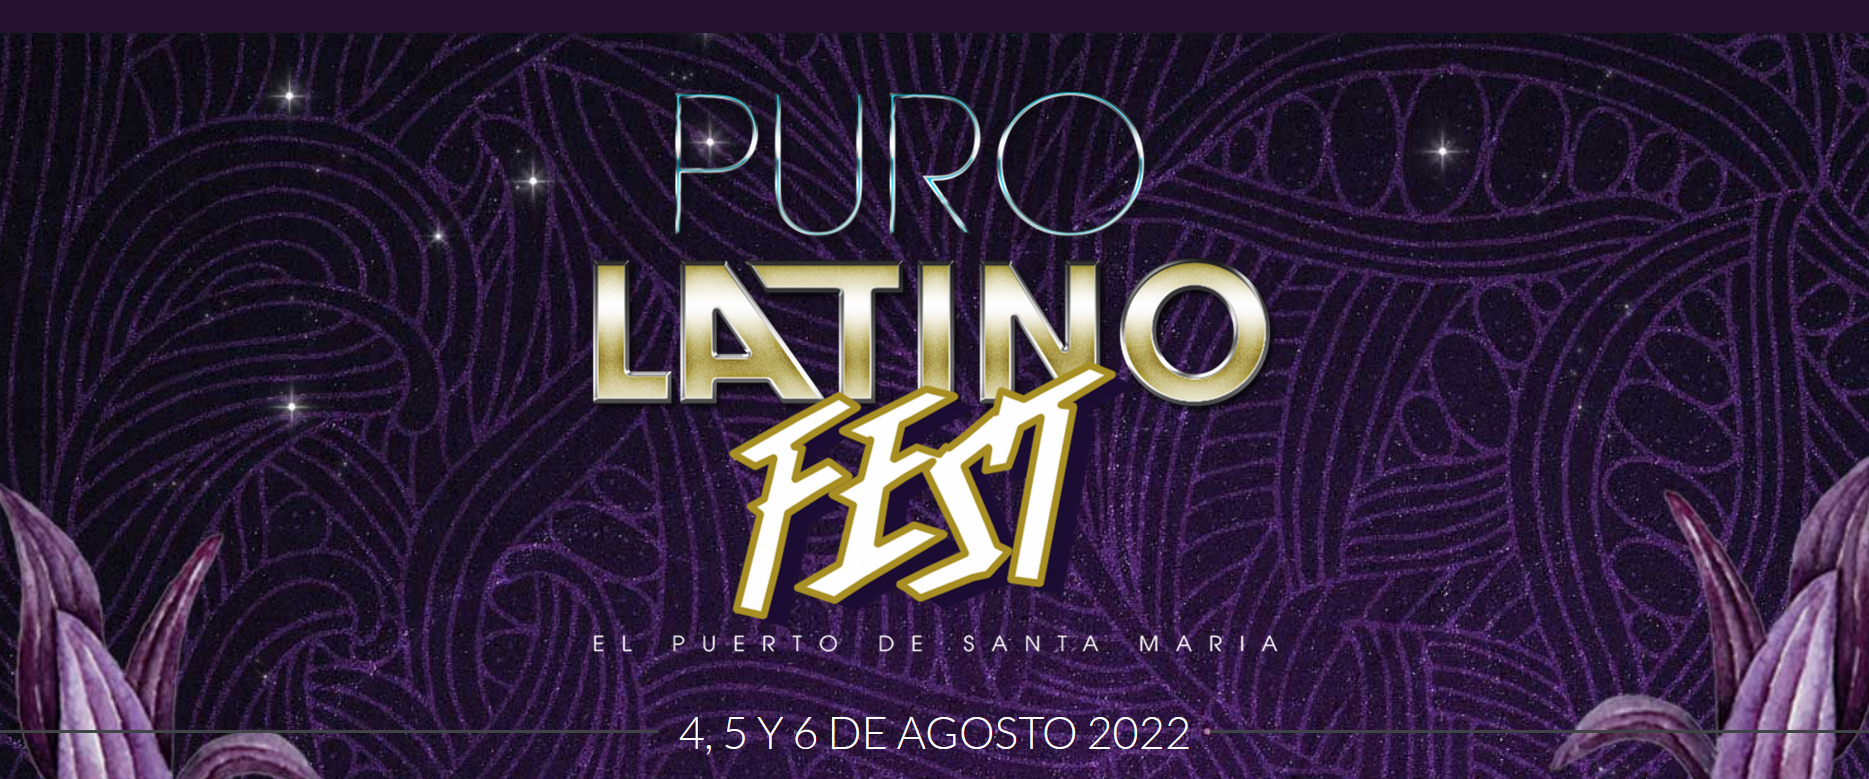 Puro Latino Fest